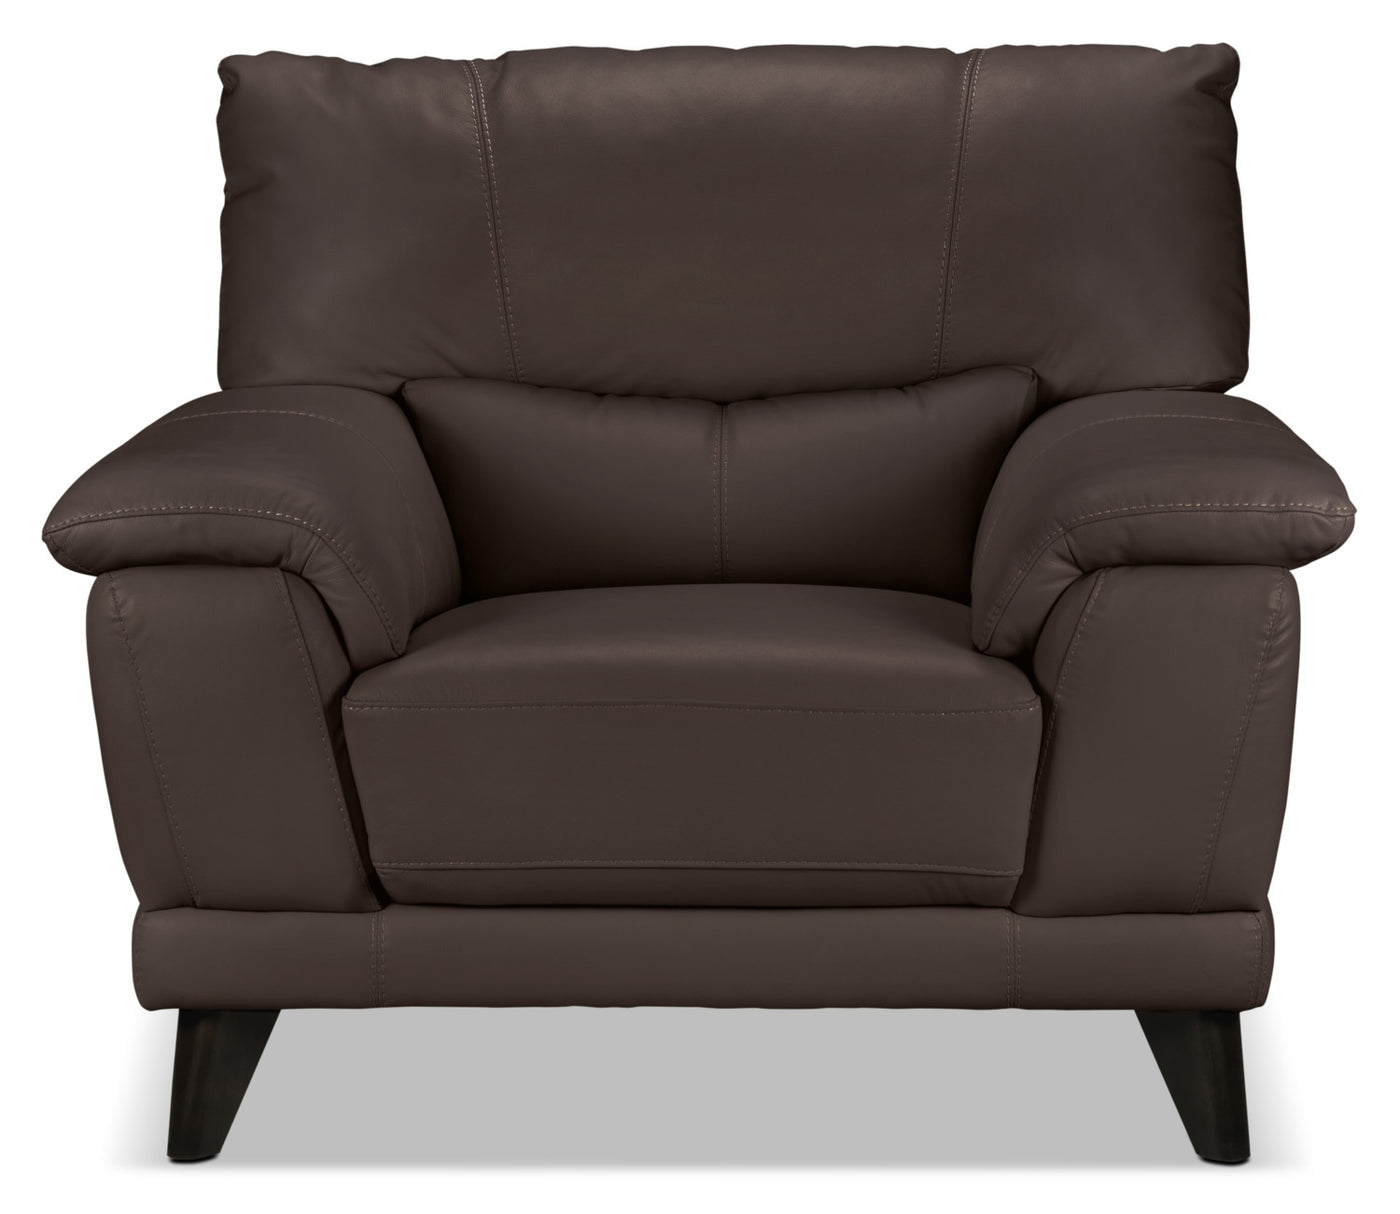 Braylon Leather Chair - Dark Chocolate